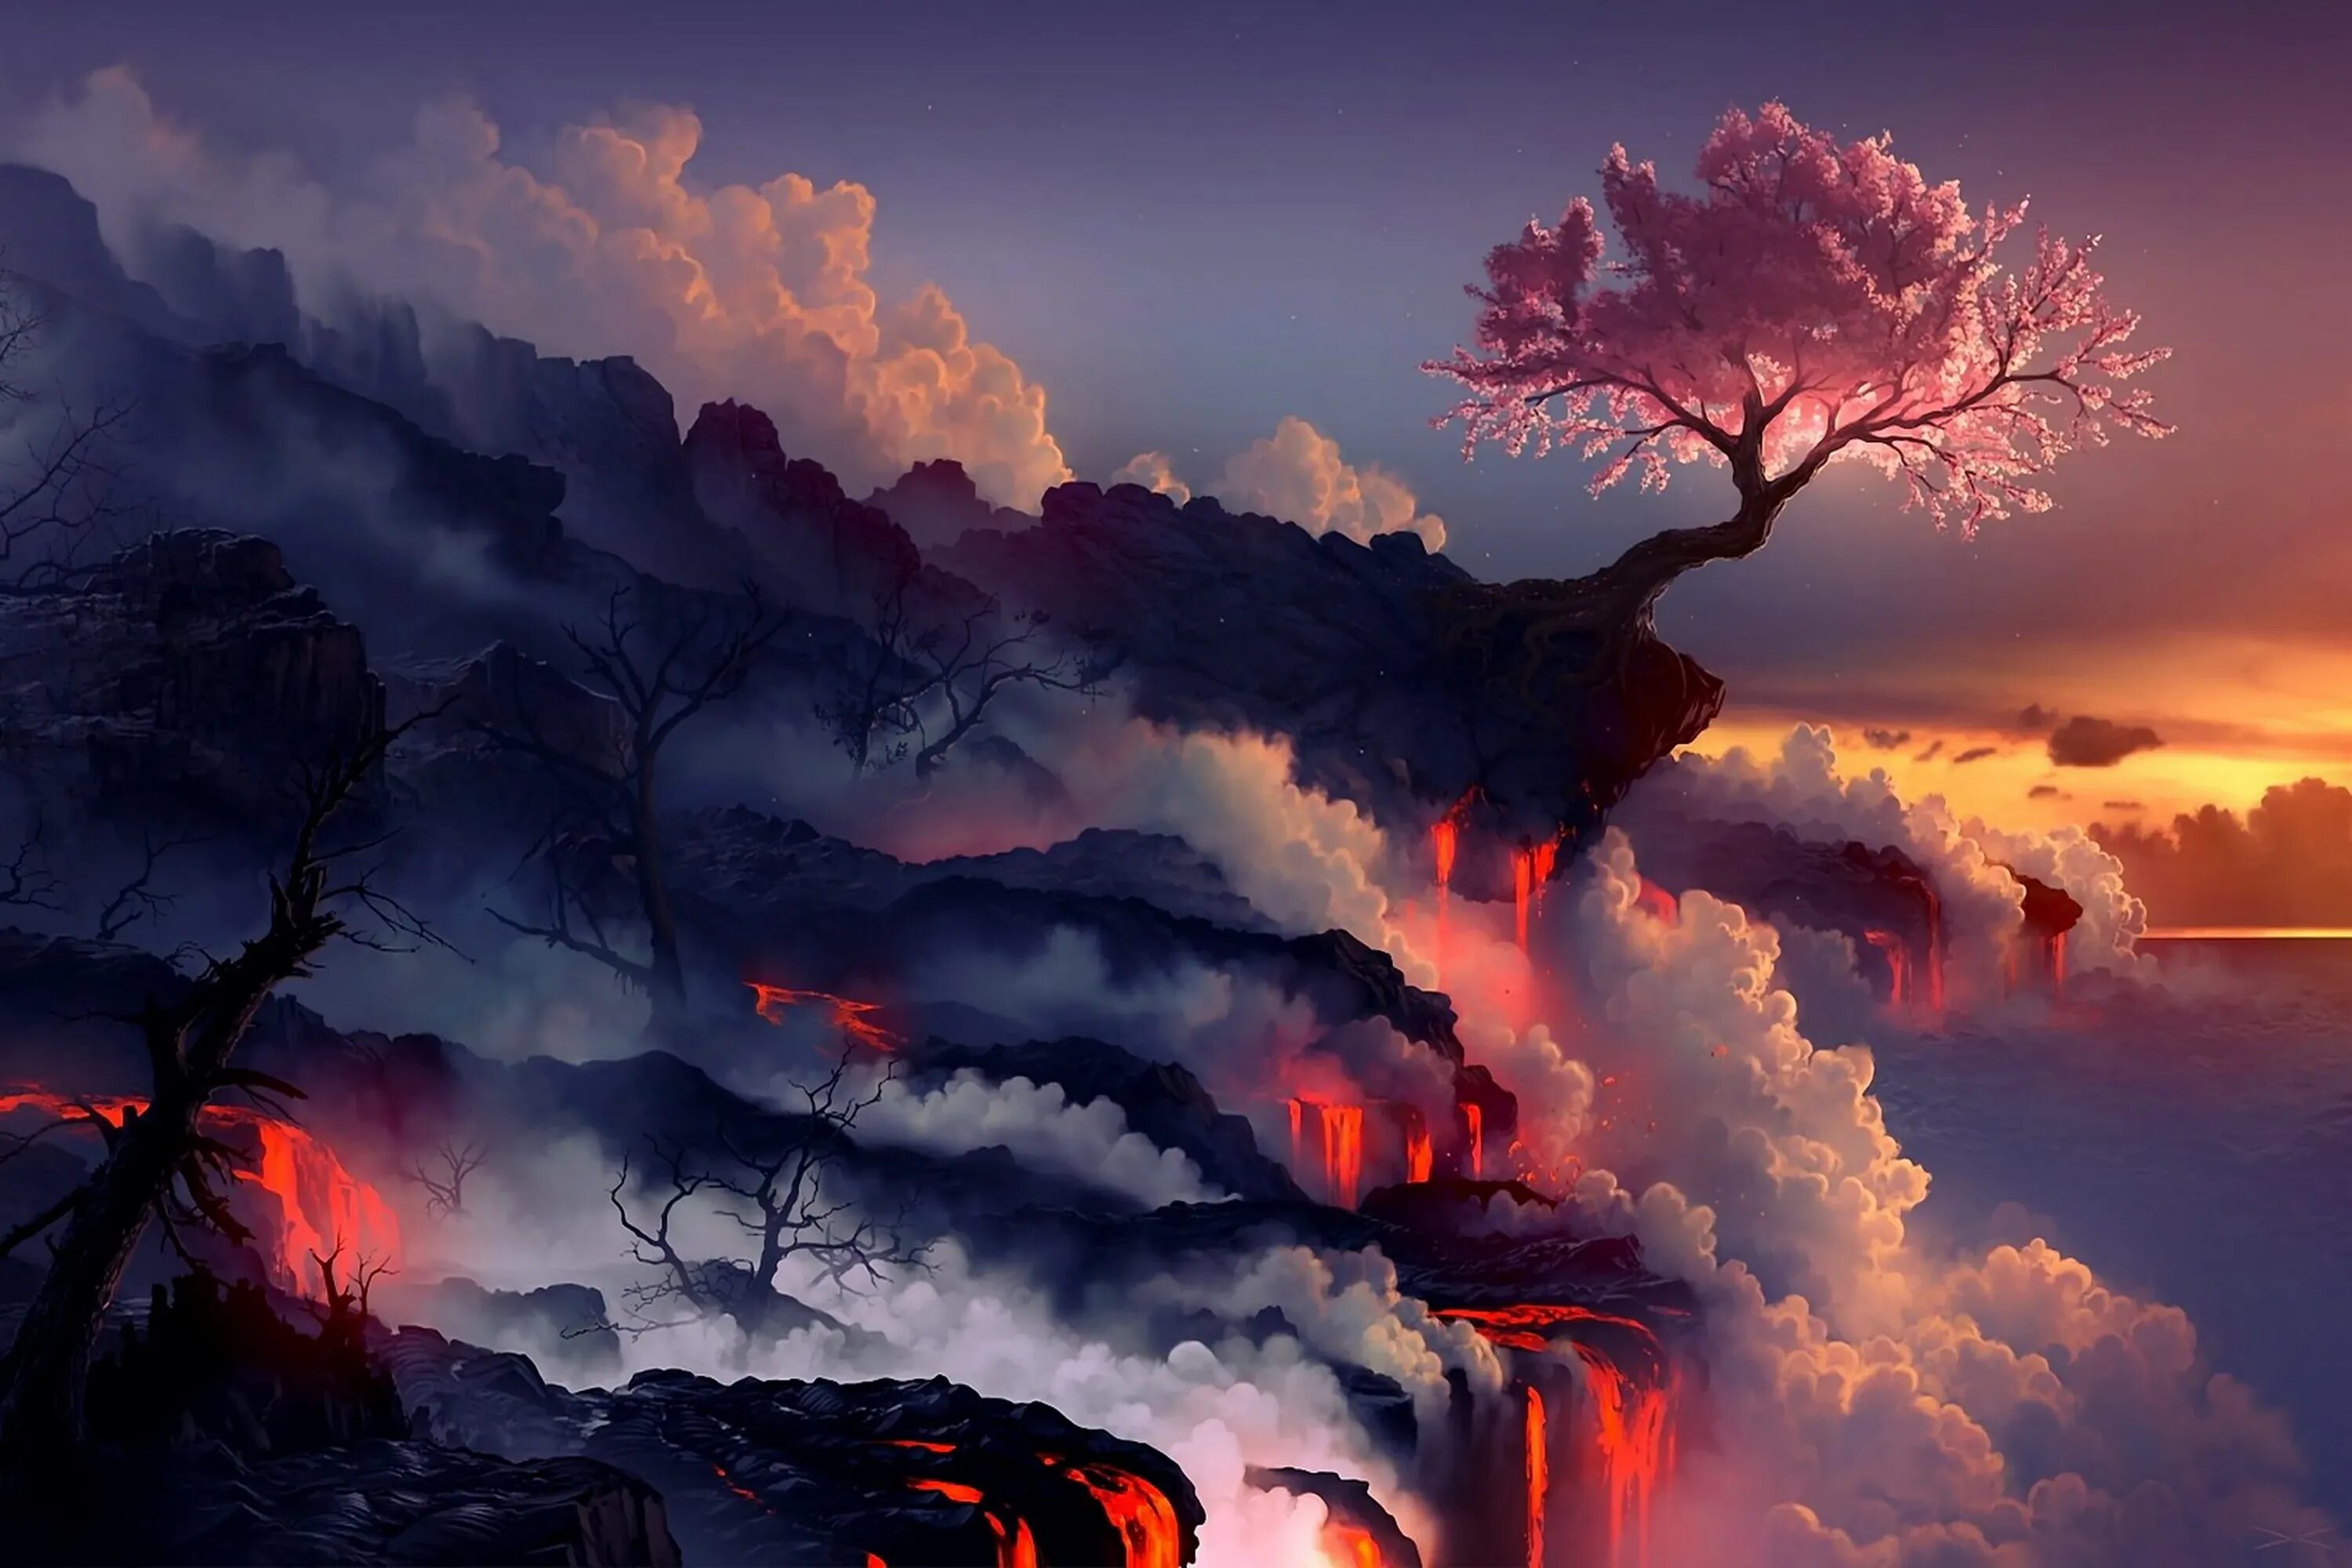 Jb new epic 2020. Извержение лава вулкан Сакура дерево. Эпический пейзаж. Фэнтези пейзажи.